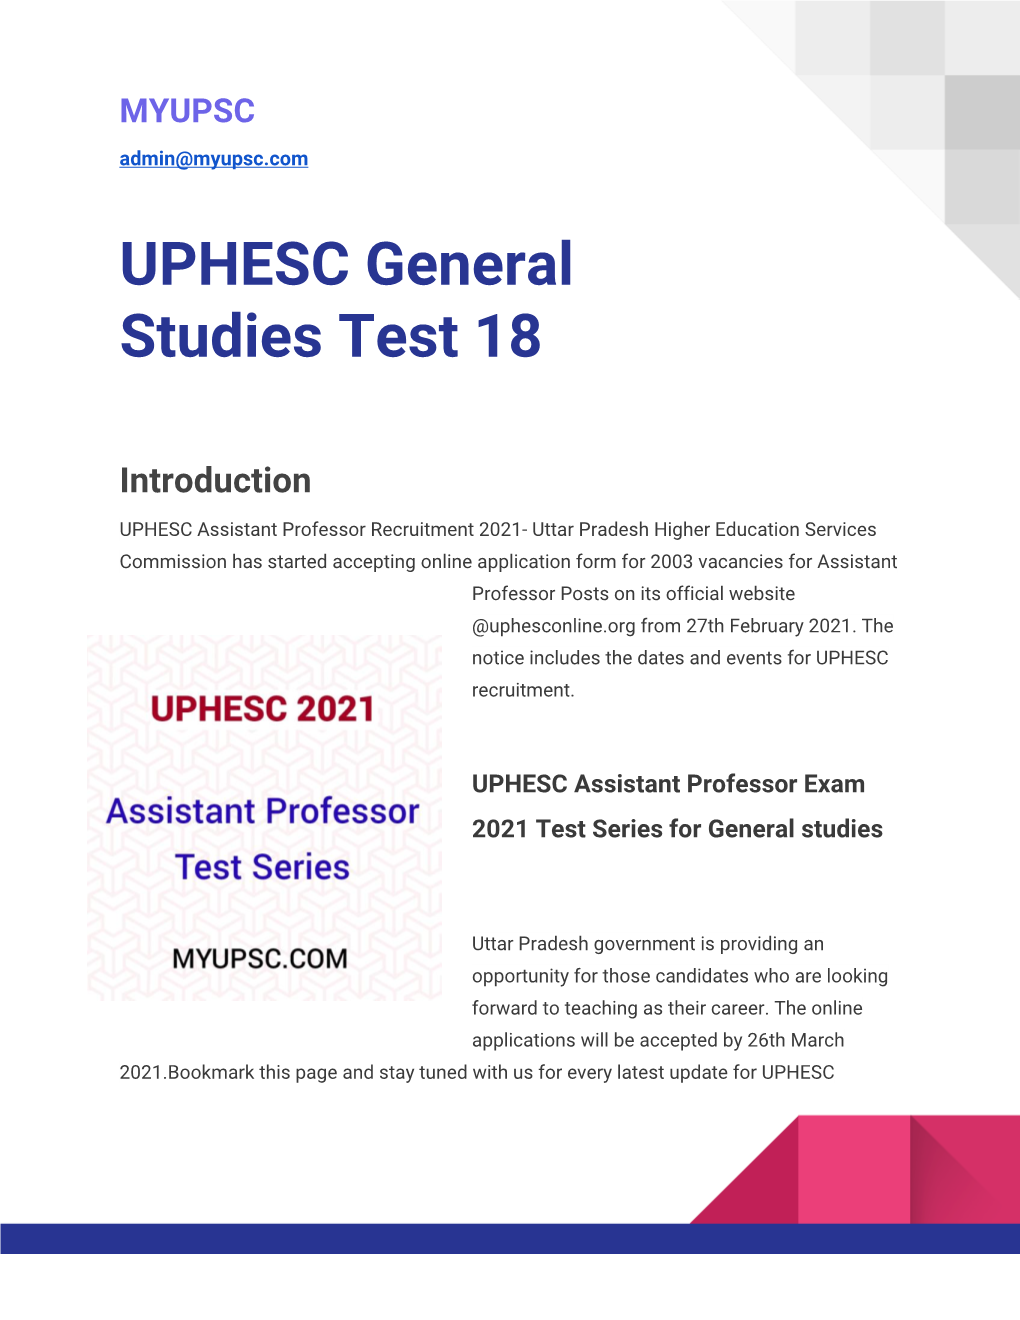 UPHESC General Studies Test 18